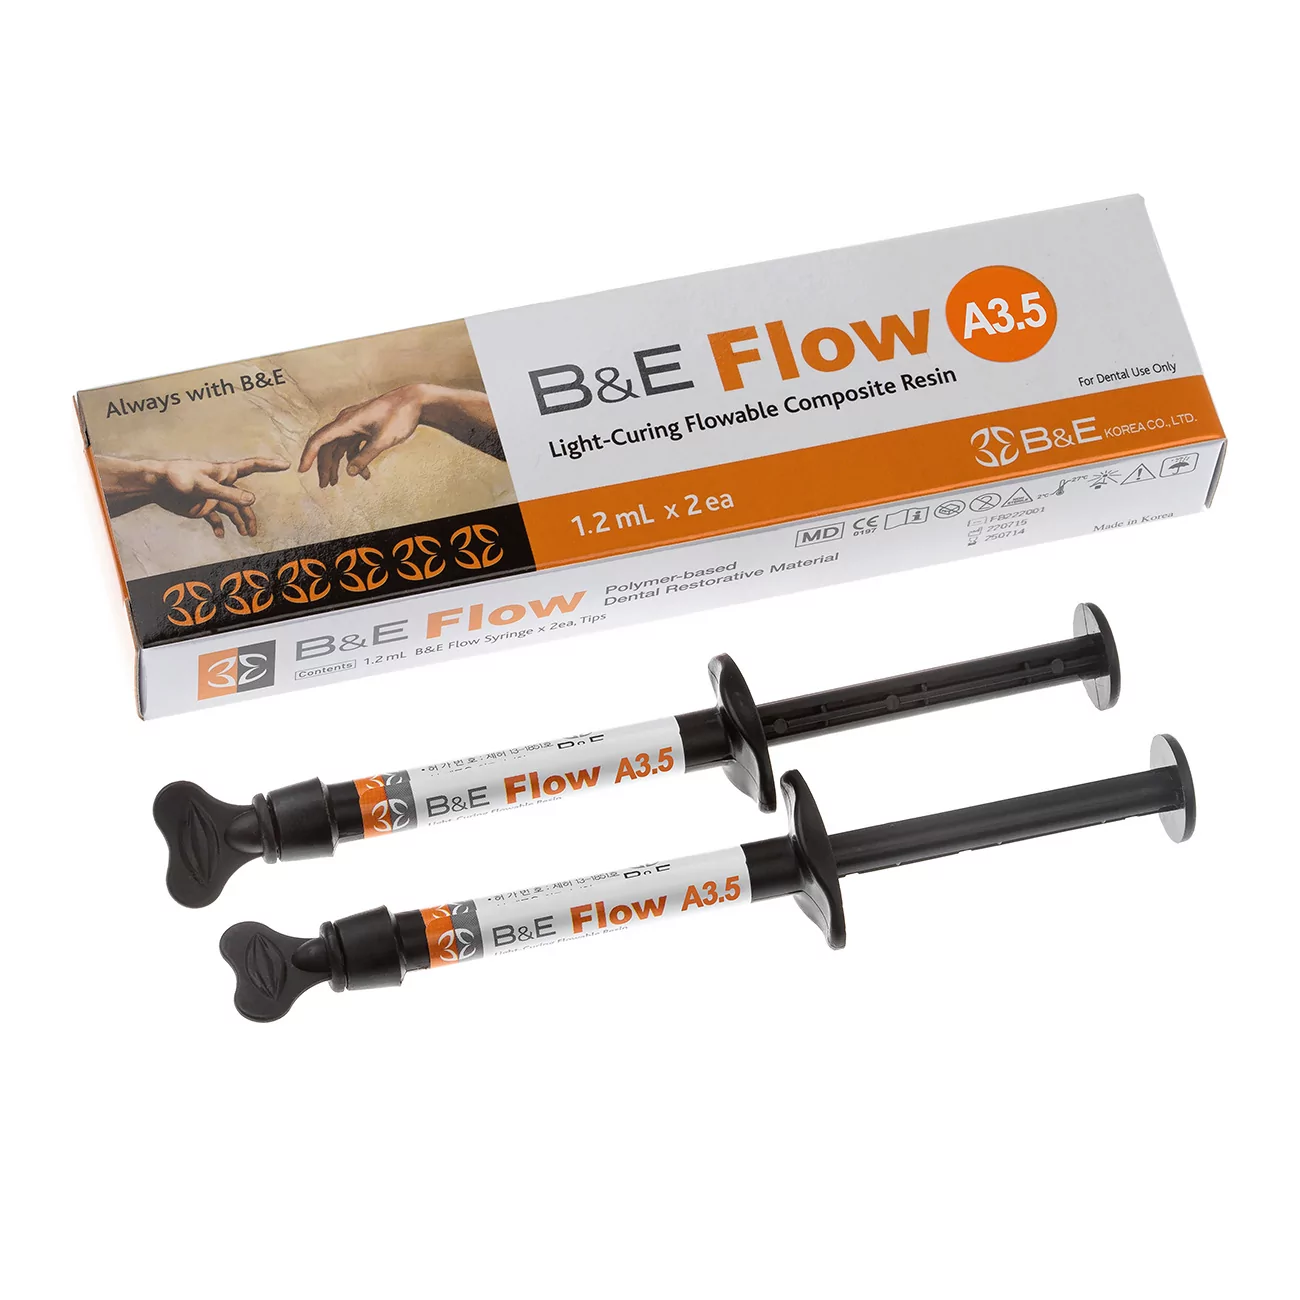 B&E Flow цвет A3,5 шприц 2гр.х2шт. Текучий светоотверждаемый композит, B&E Korea